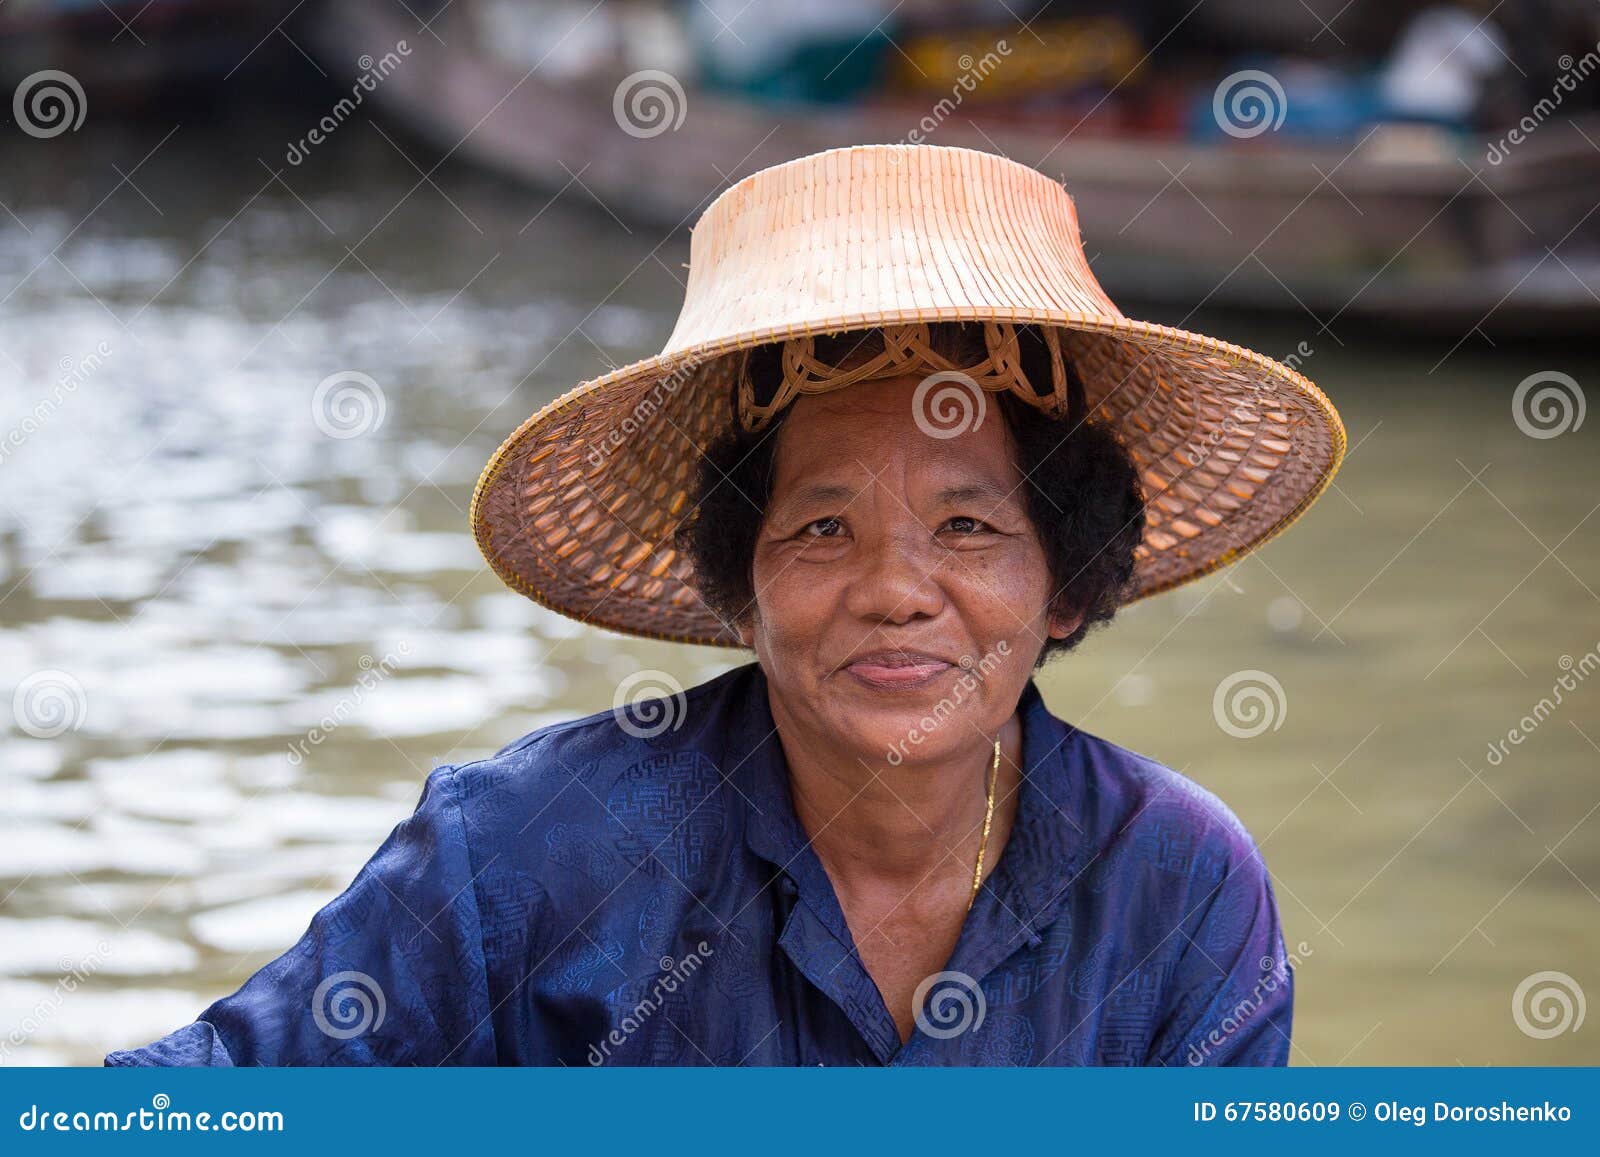 Старые тайки. Тайки портрет. Старая тайка. Портрет тайца. Тайланд женщина средних лет.